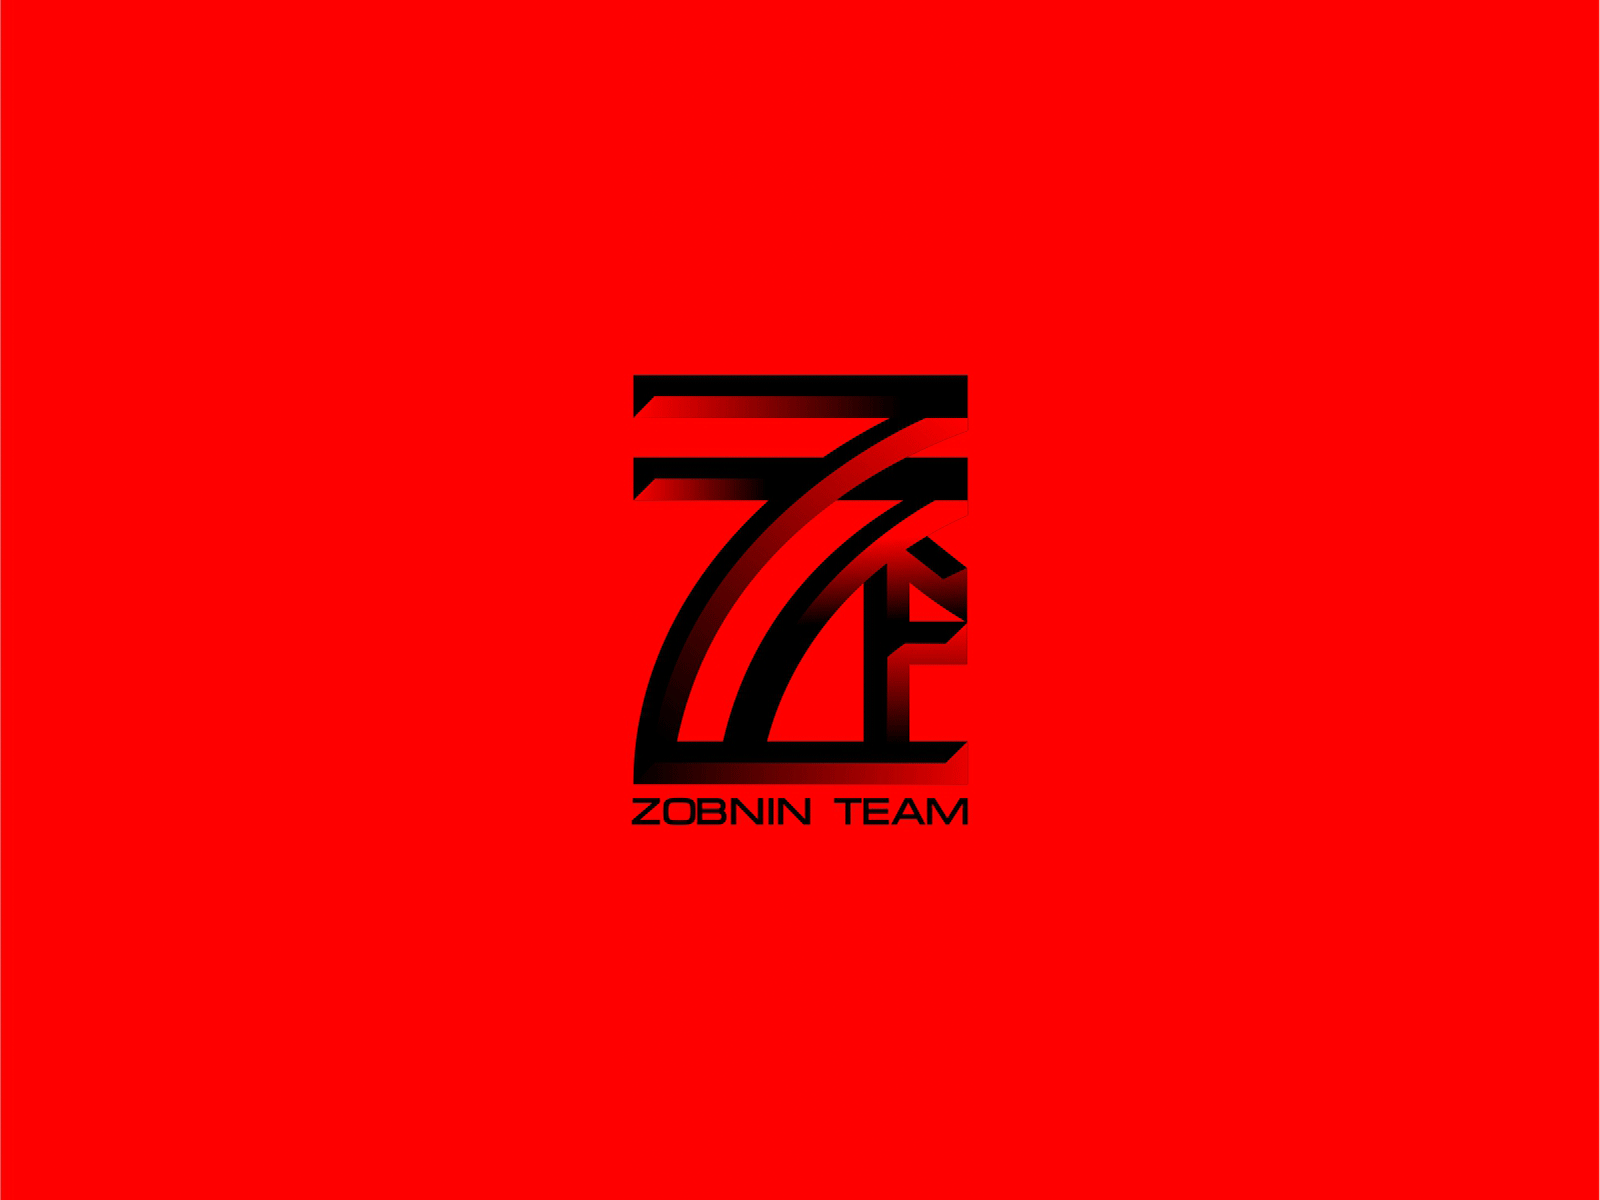 zobnin-team-football-team-logo-by-johanneszlobin-on-dribbble